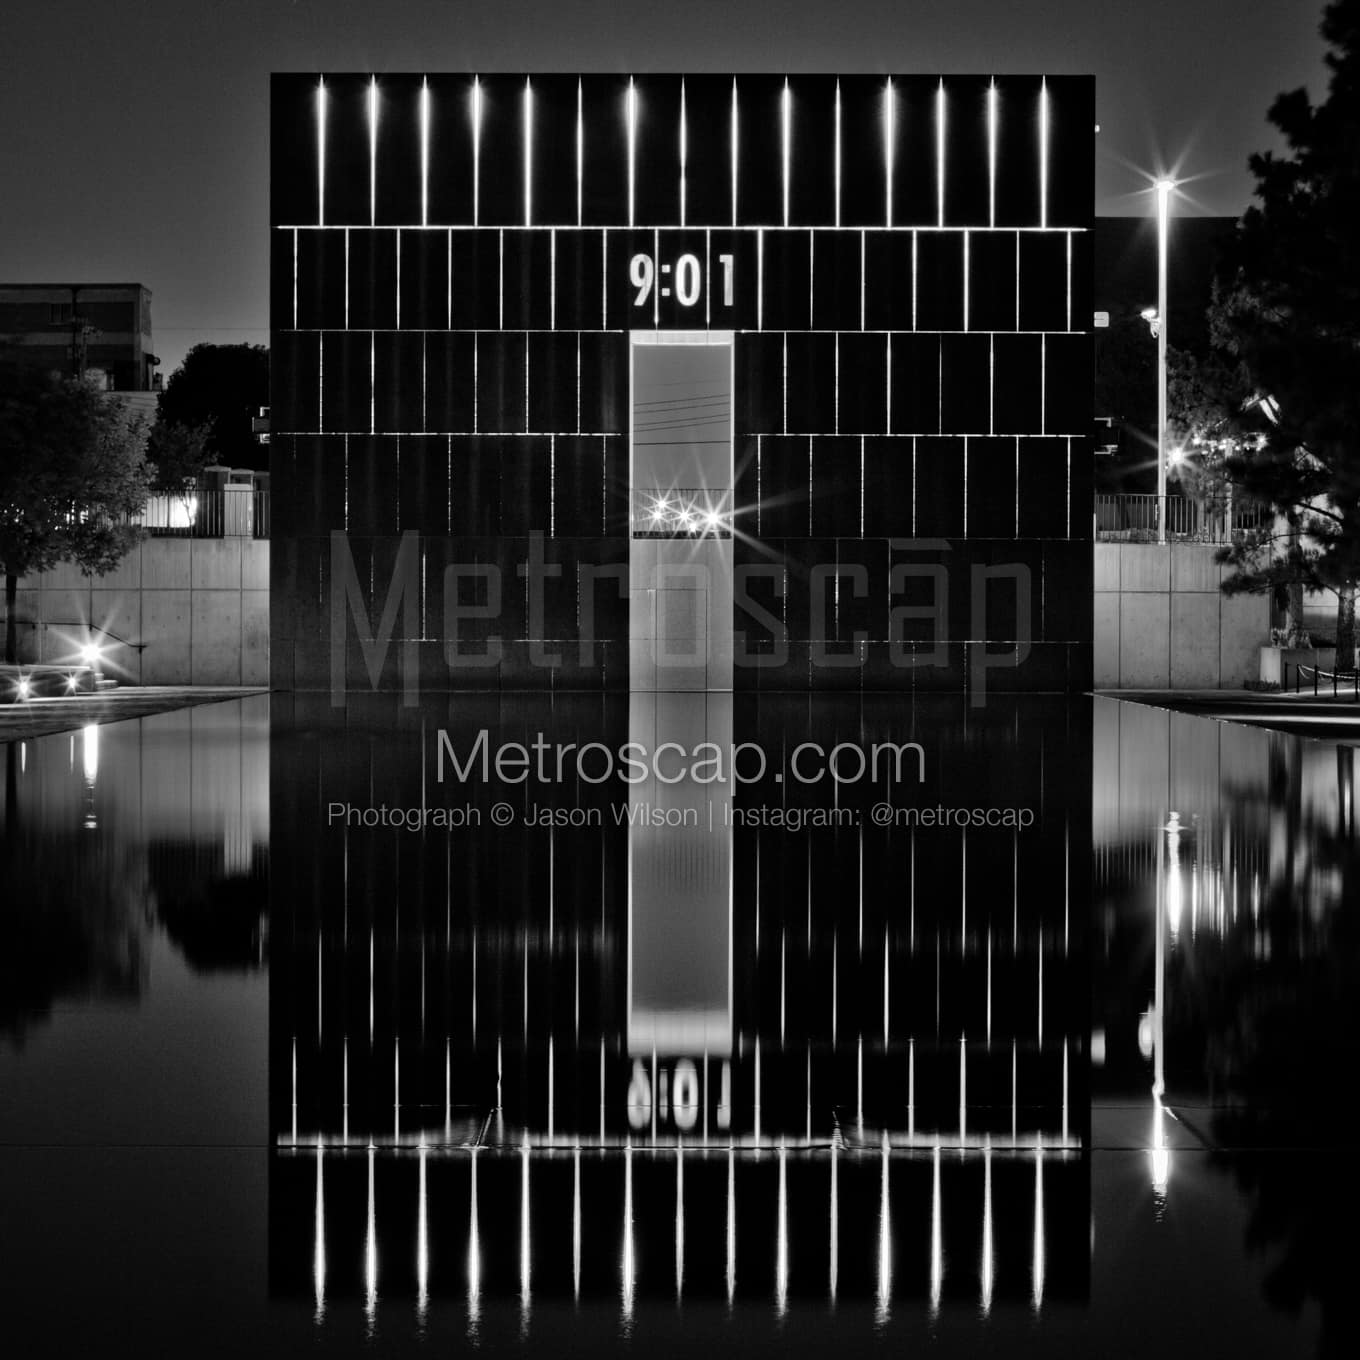 Oklahoma City Black & White Landscape Photography